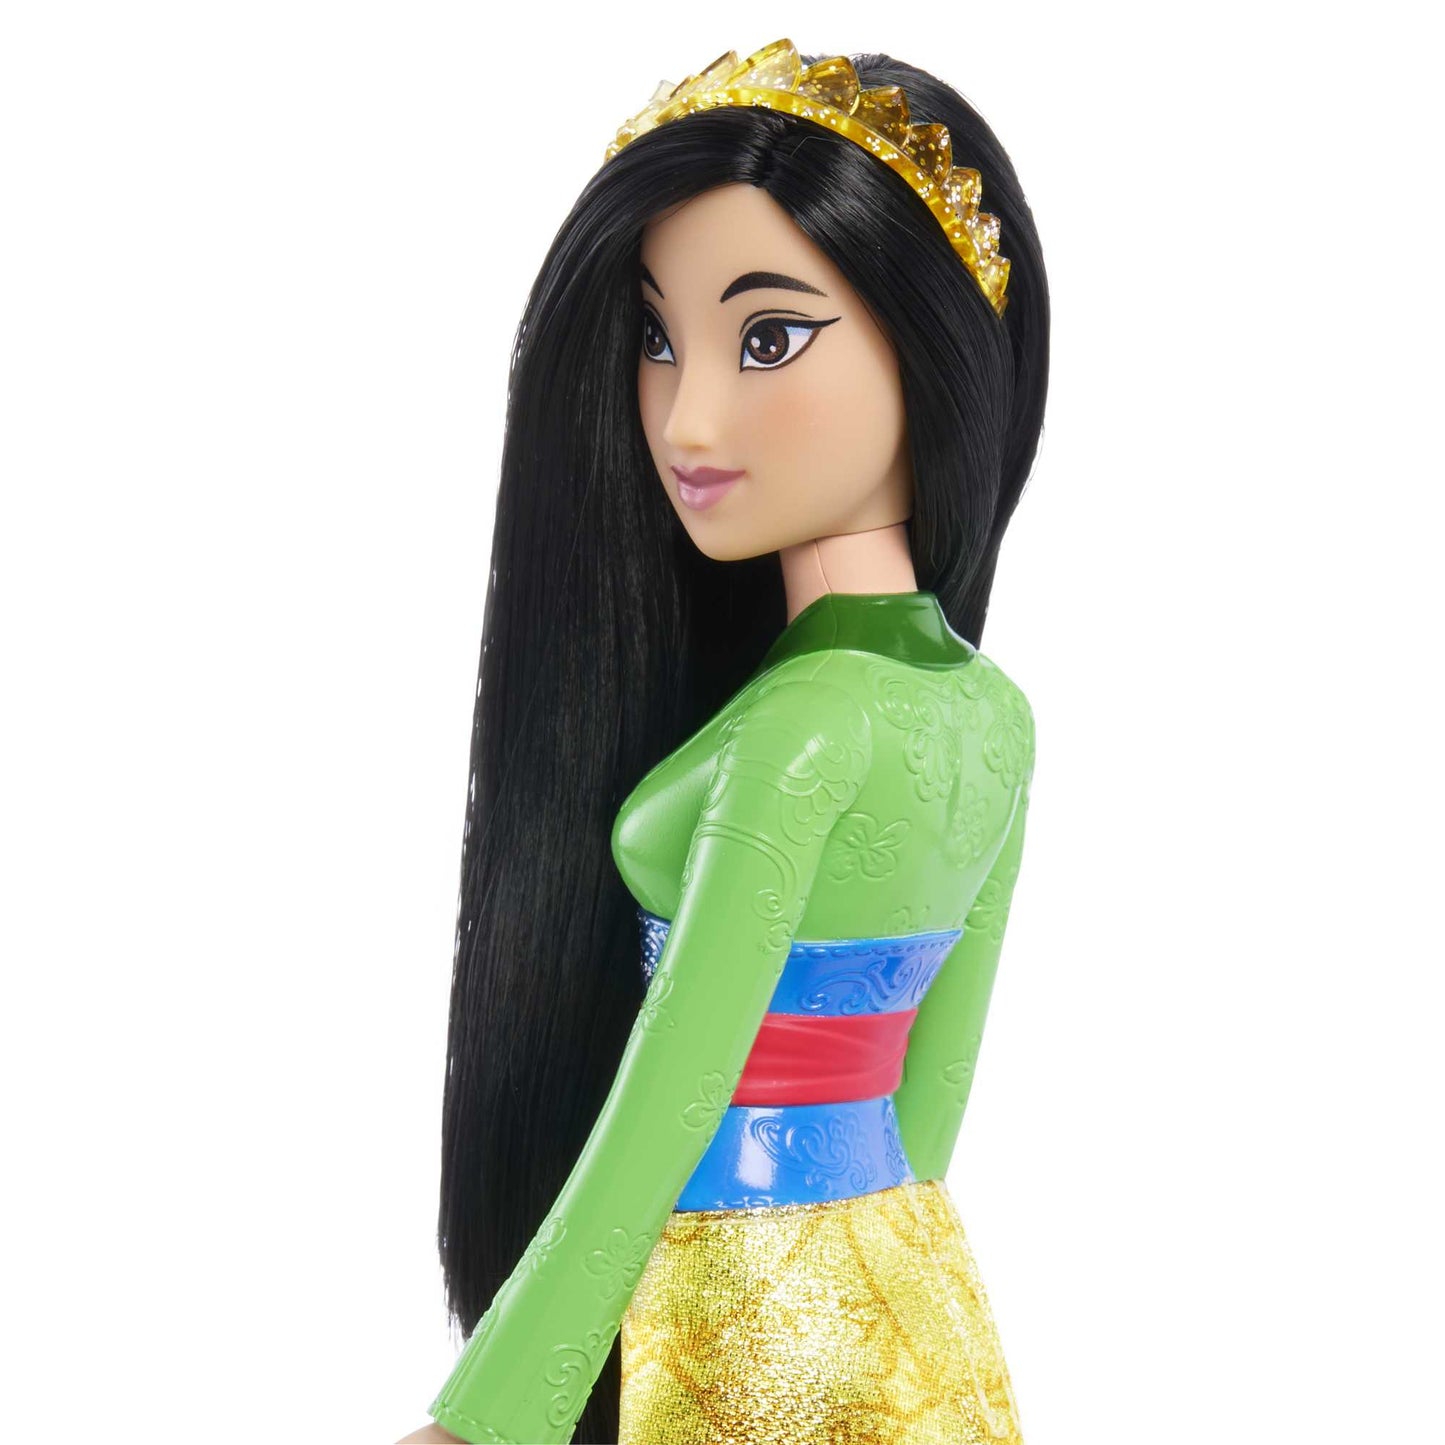 Disney Princess Mulan Docka